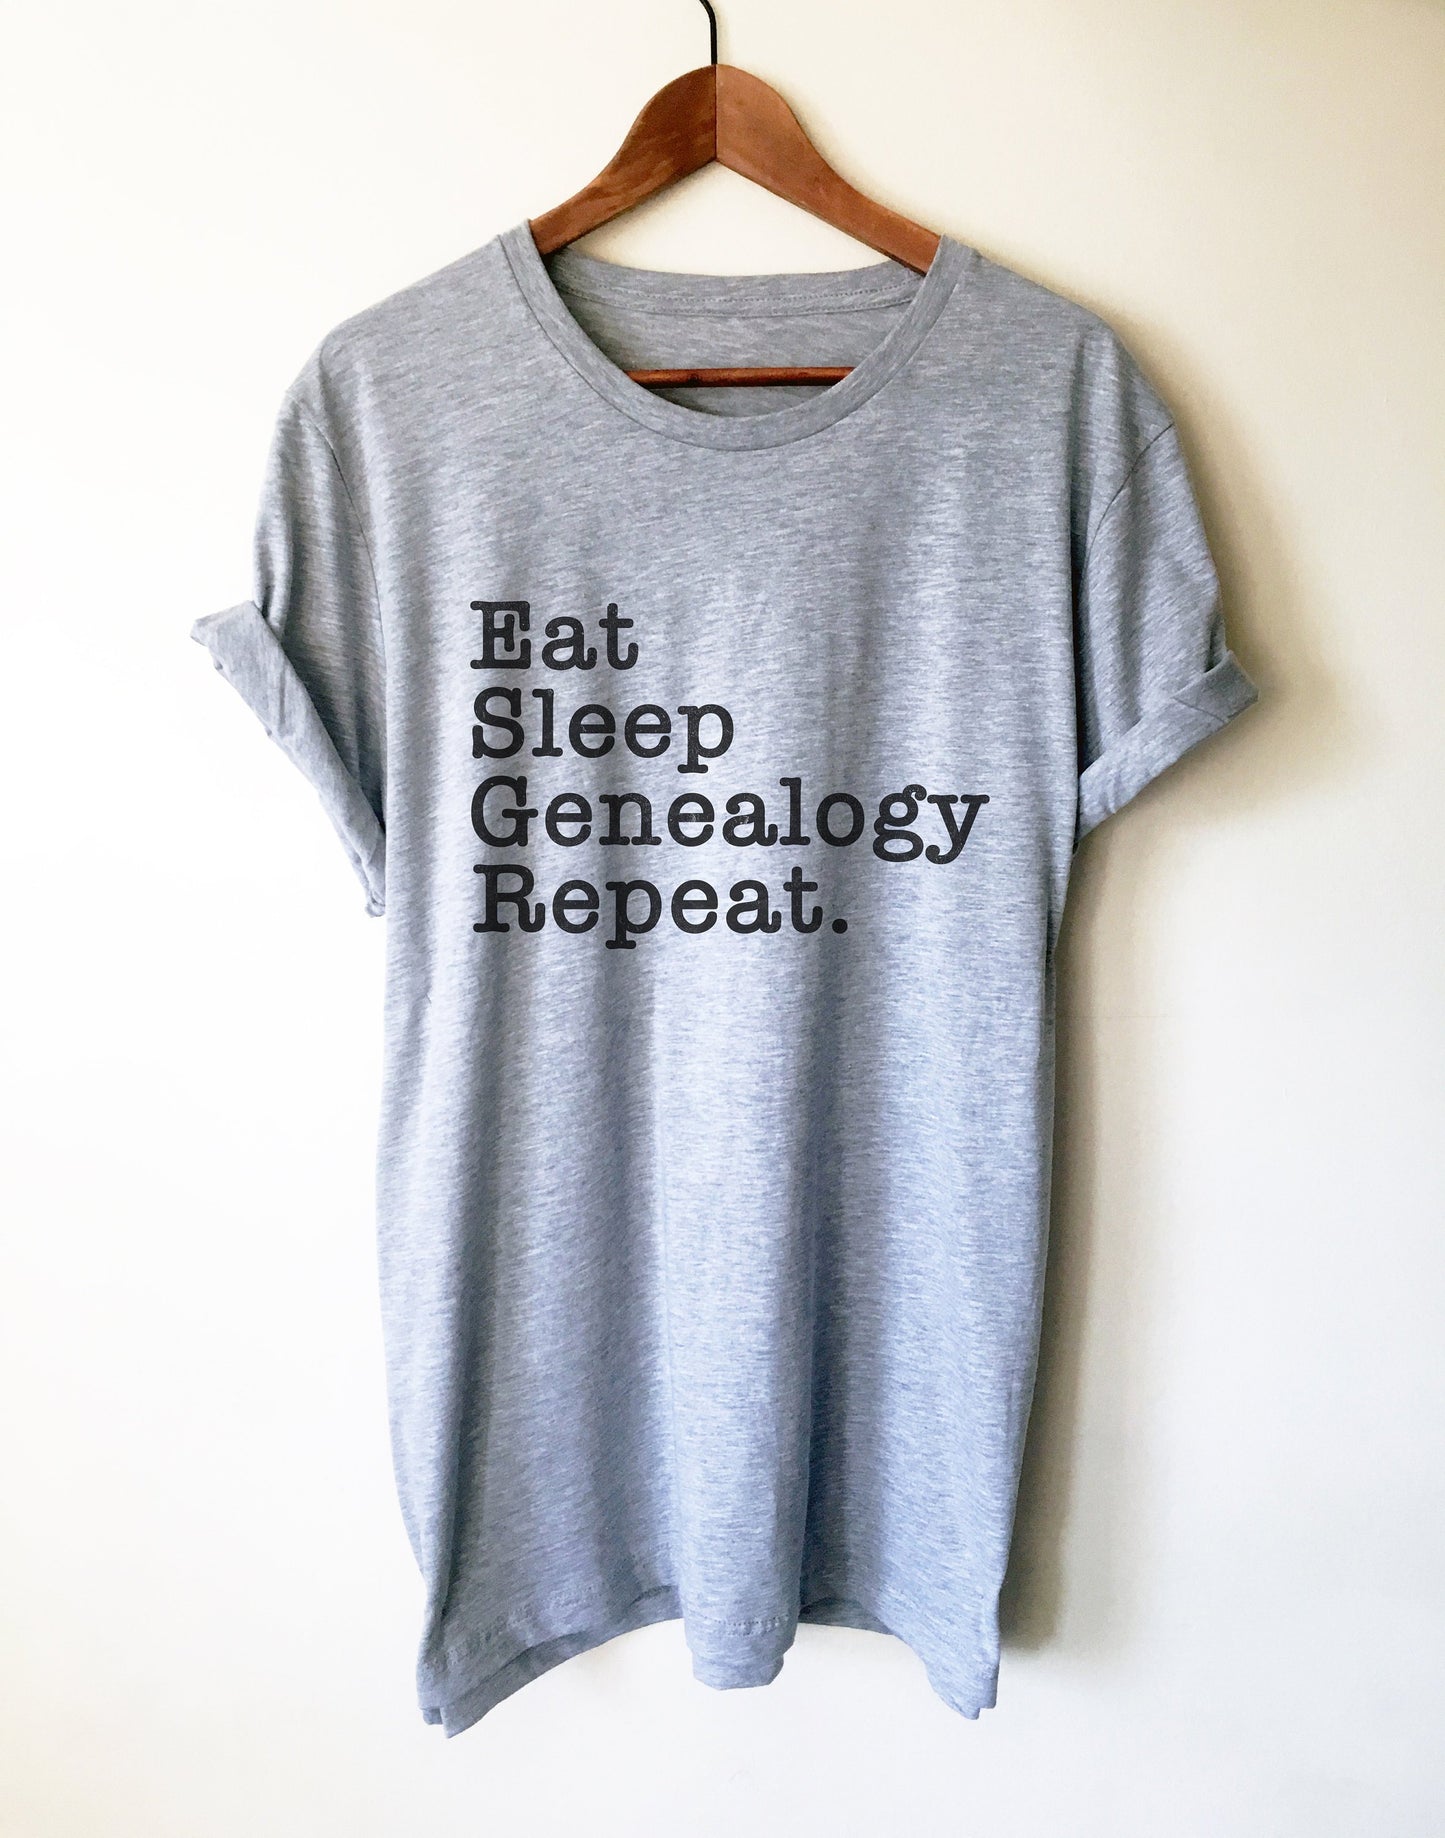 Eat Sleep Genealogy Repeat Unisex Shirt - Genealogy Shirt, Genealogy Gift, Genealogist Shirt, Genealogist Gift, Family Tree, Research Shirt